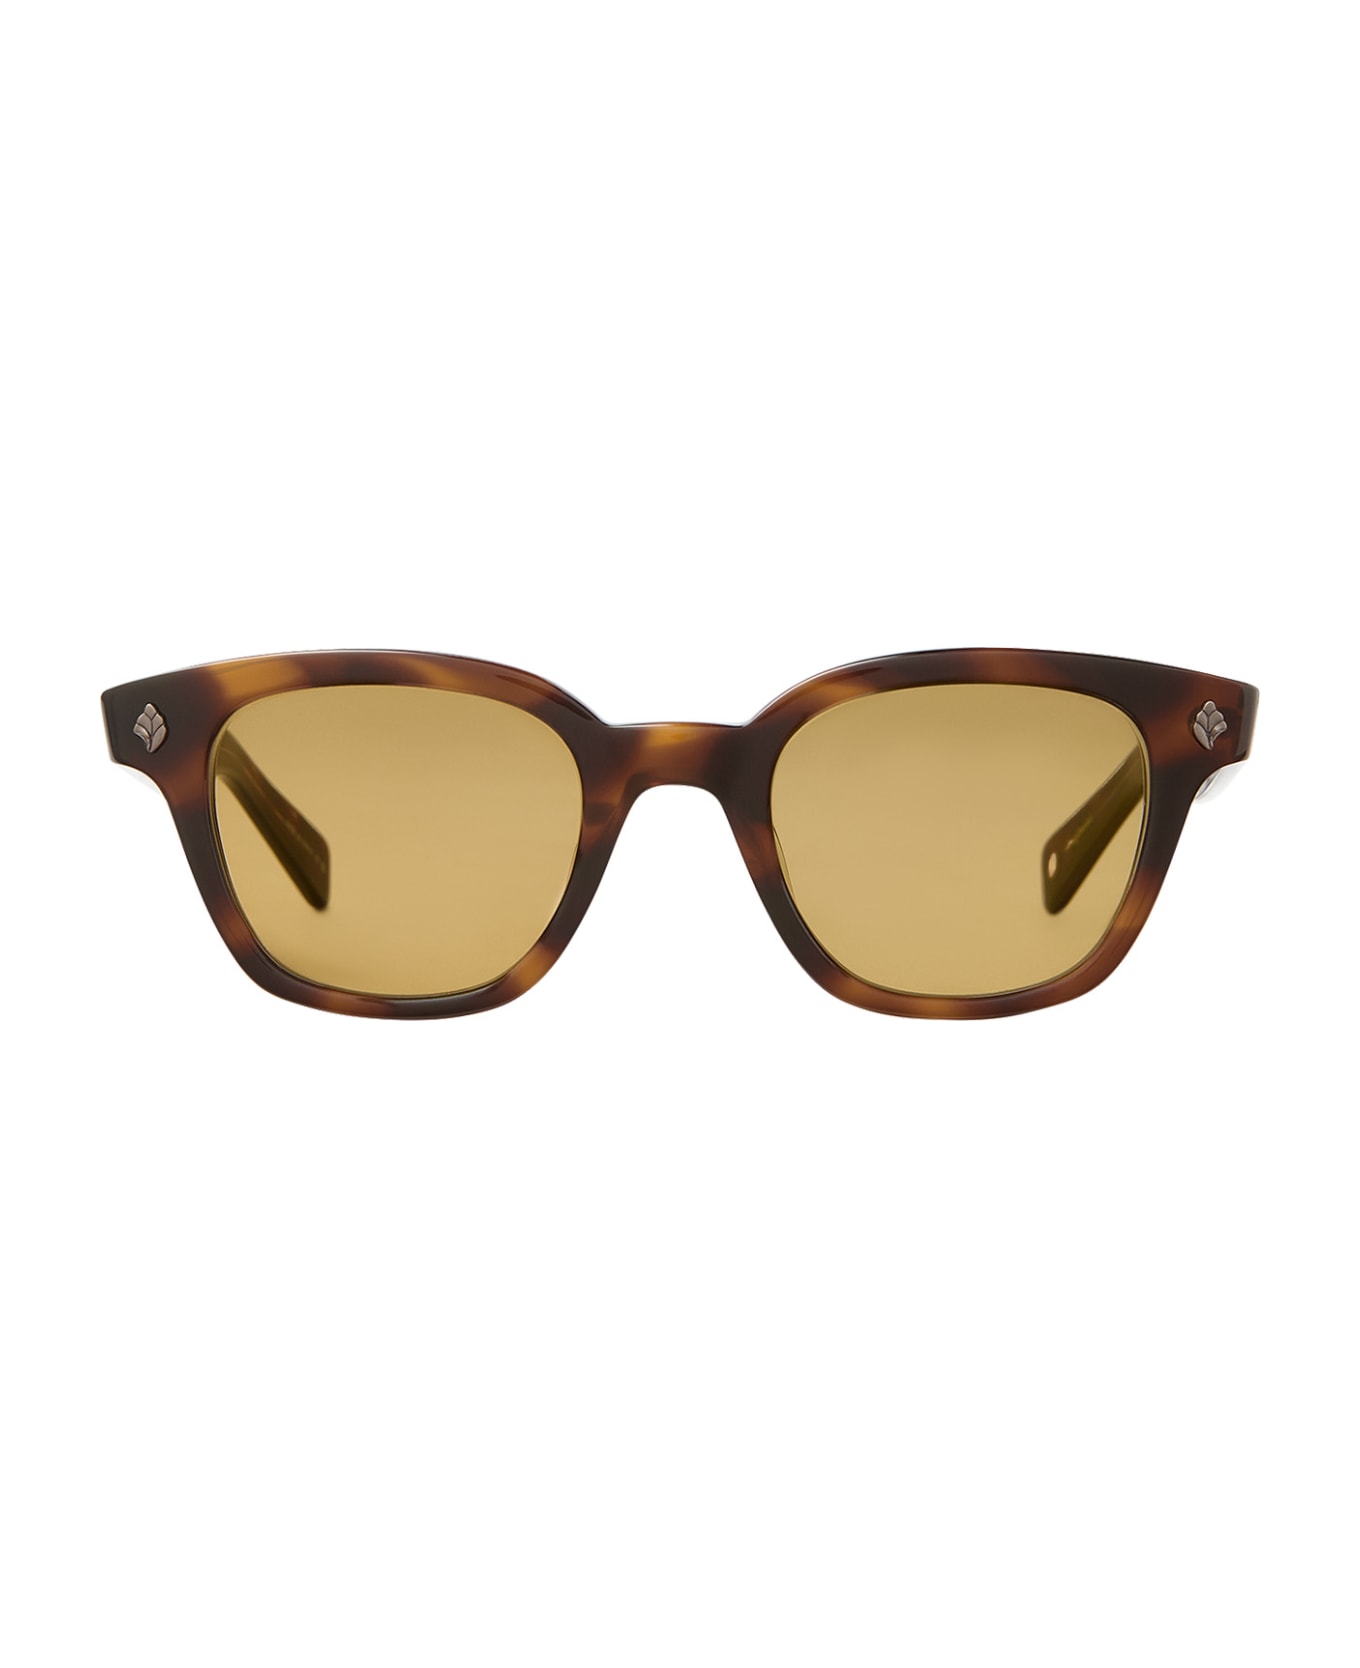 Garrett Leight Naples Sun Spotted Brown Shell Sunglasses - Spotted Brown Shell